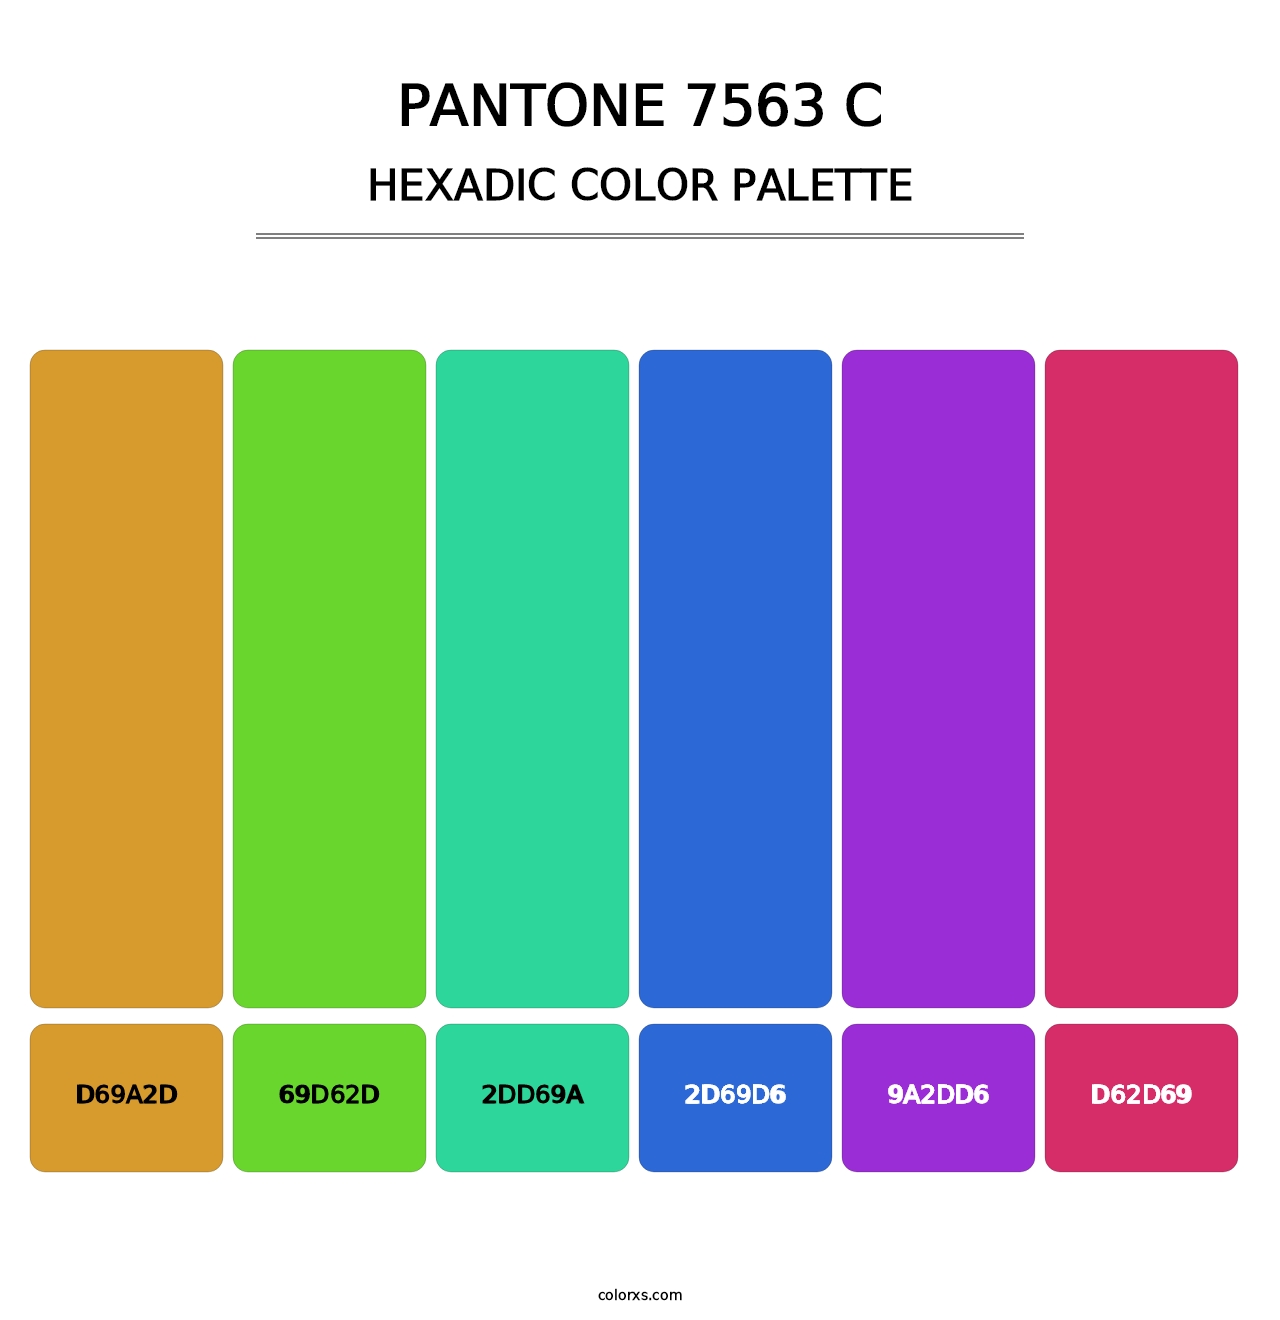 PANTONE 7563 C - Hexadic Color Palette